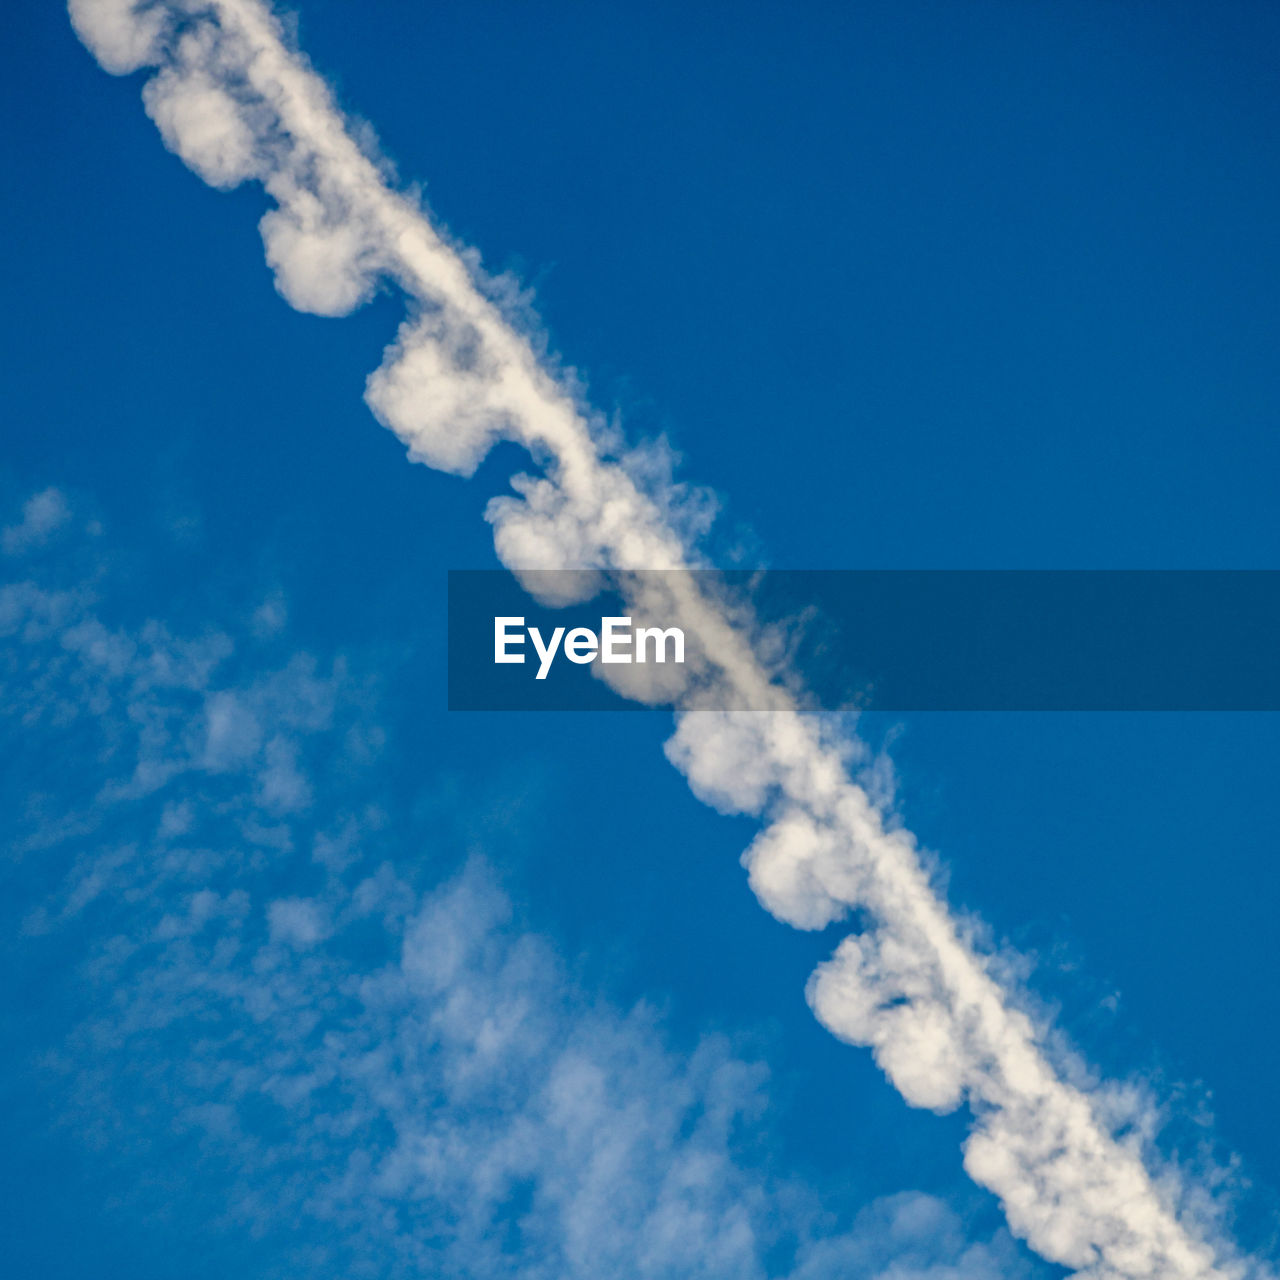 Fluffy chemtrail or contrail overhead against blue sky